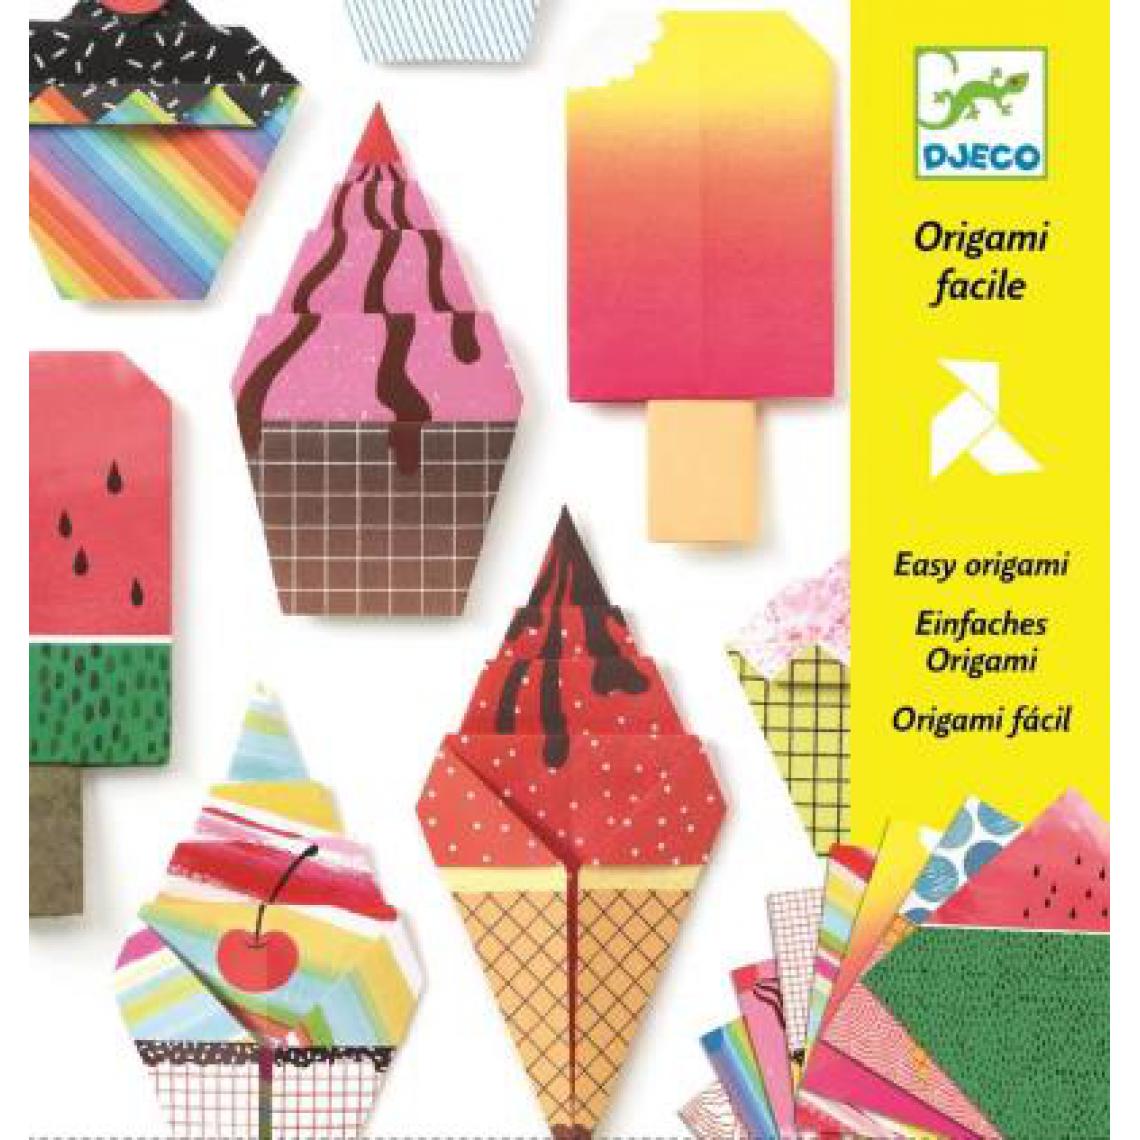 Djeco - Origami Delices - Dessin et peinture